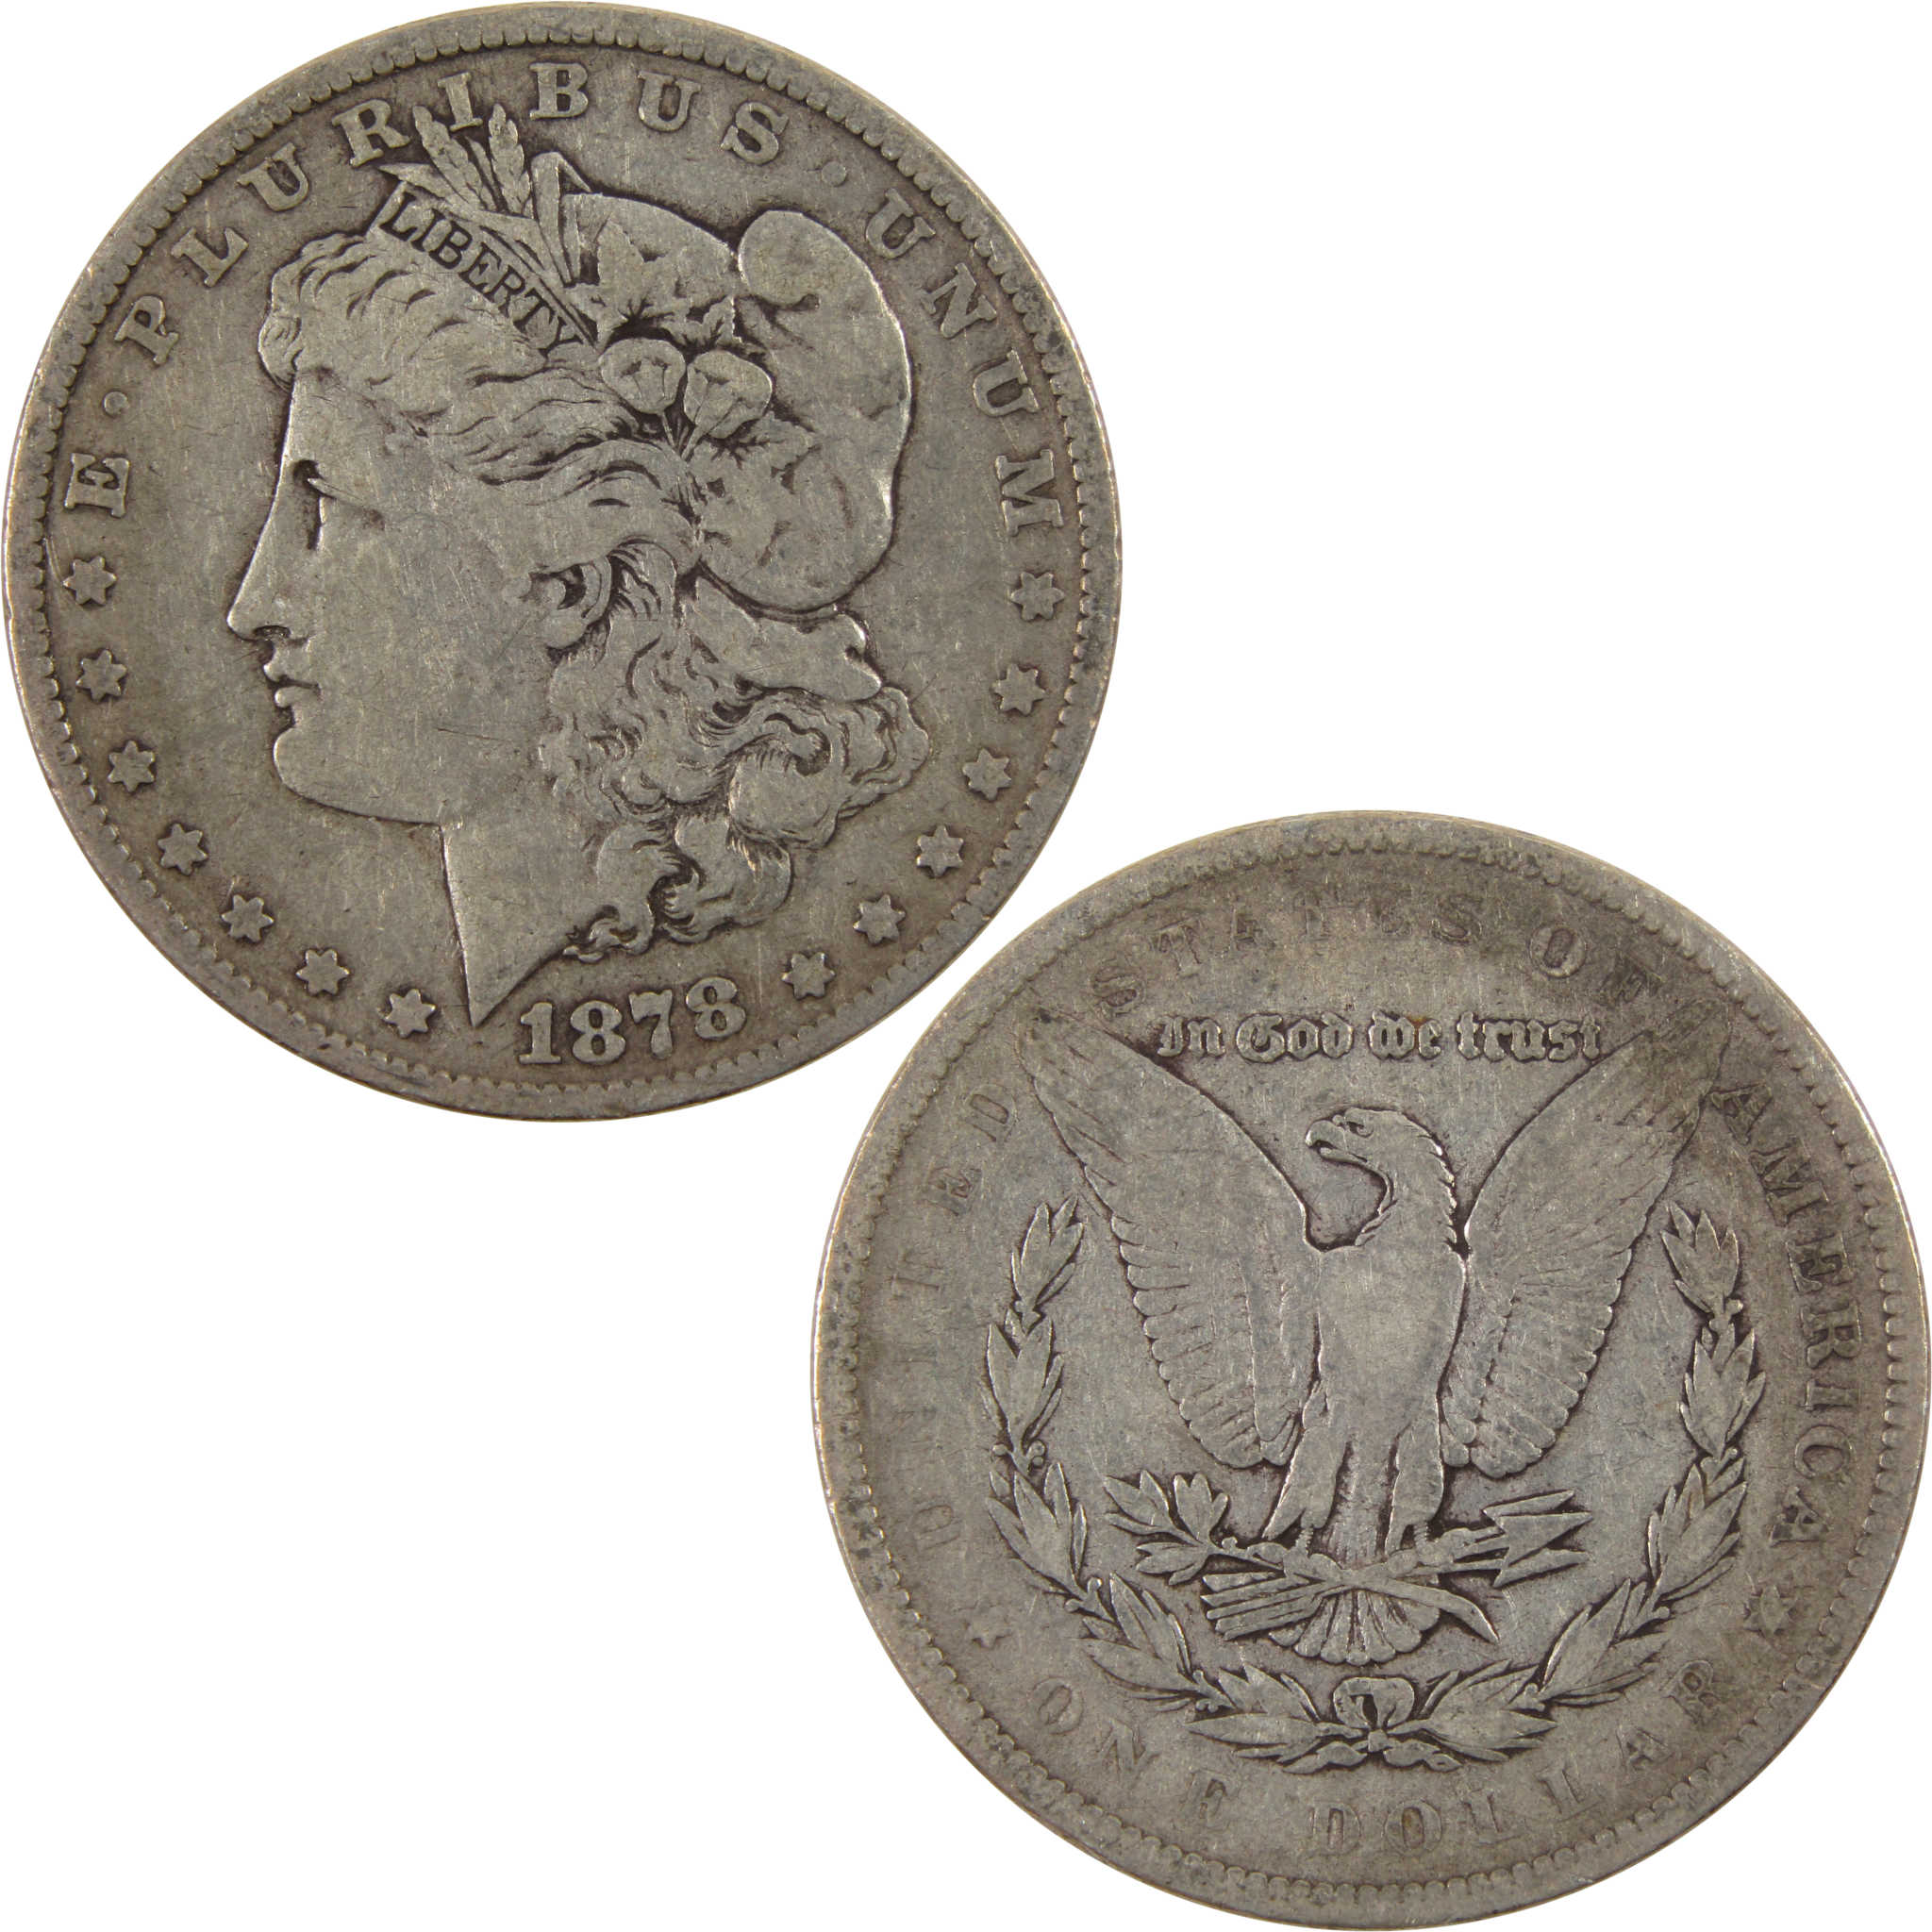 1878 7TF Rev 79 Morgan Dollar F Fine Silver $1 Coin SKU:I9159 - Morgan coin - Morgan silver dollar - Morgan silver dollar for sale - Profile Coins &amp; Collectibles